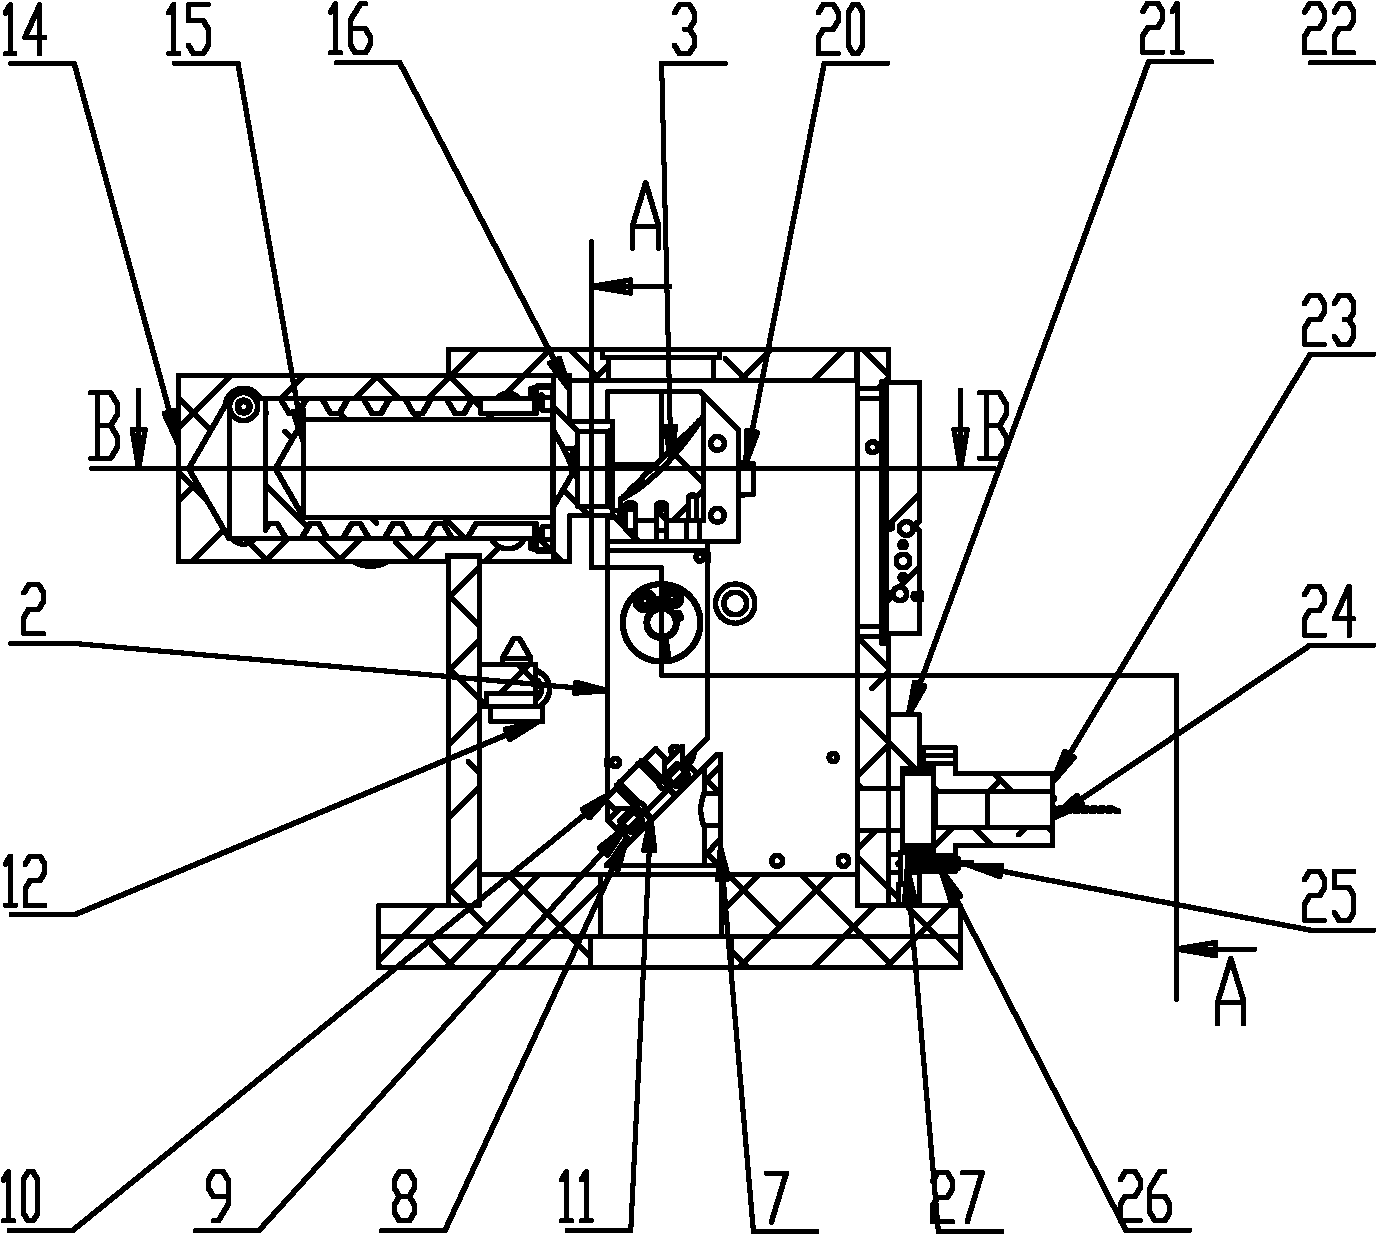 Mechanical optical gate of high-power laser